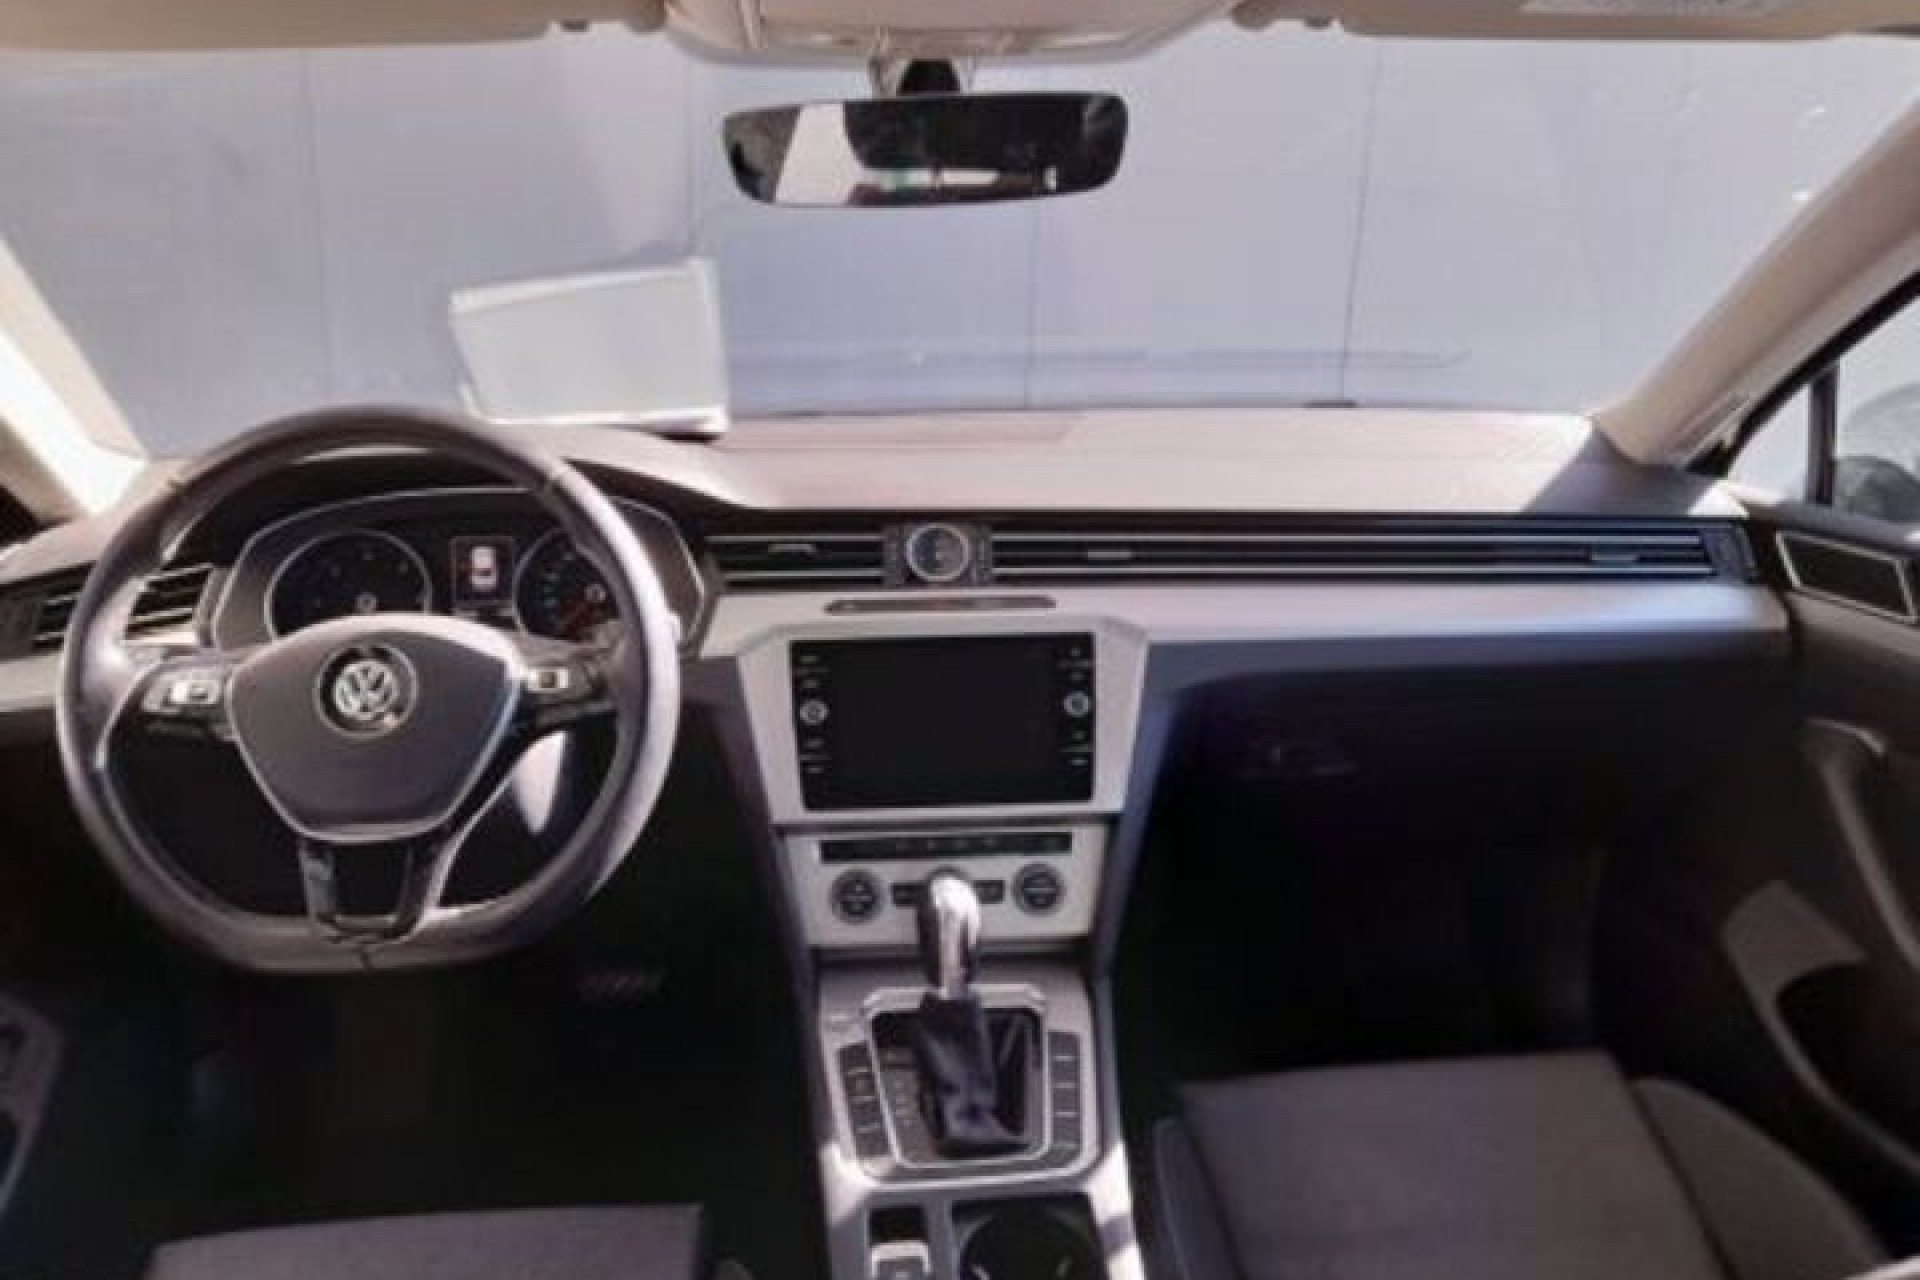 Volkswagen Passat 2.0 CR TDI DSG-Tiptronik Comfortline Sport FULL-LED Navigacija Kamera 2xParktronic ACC-SYSTEM 150KS MAX-VOLL -New Modell 2019-